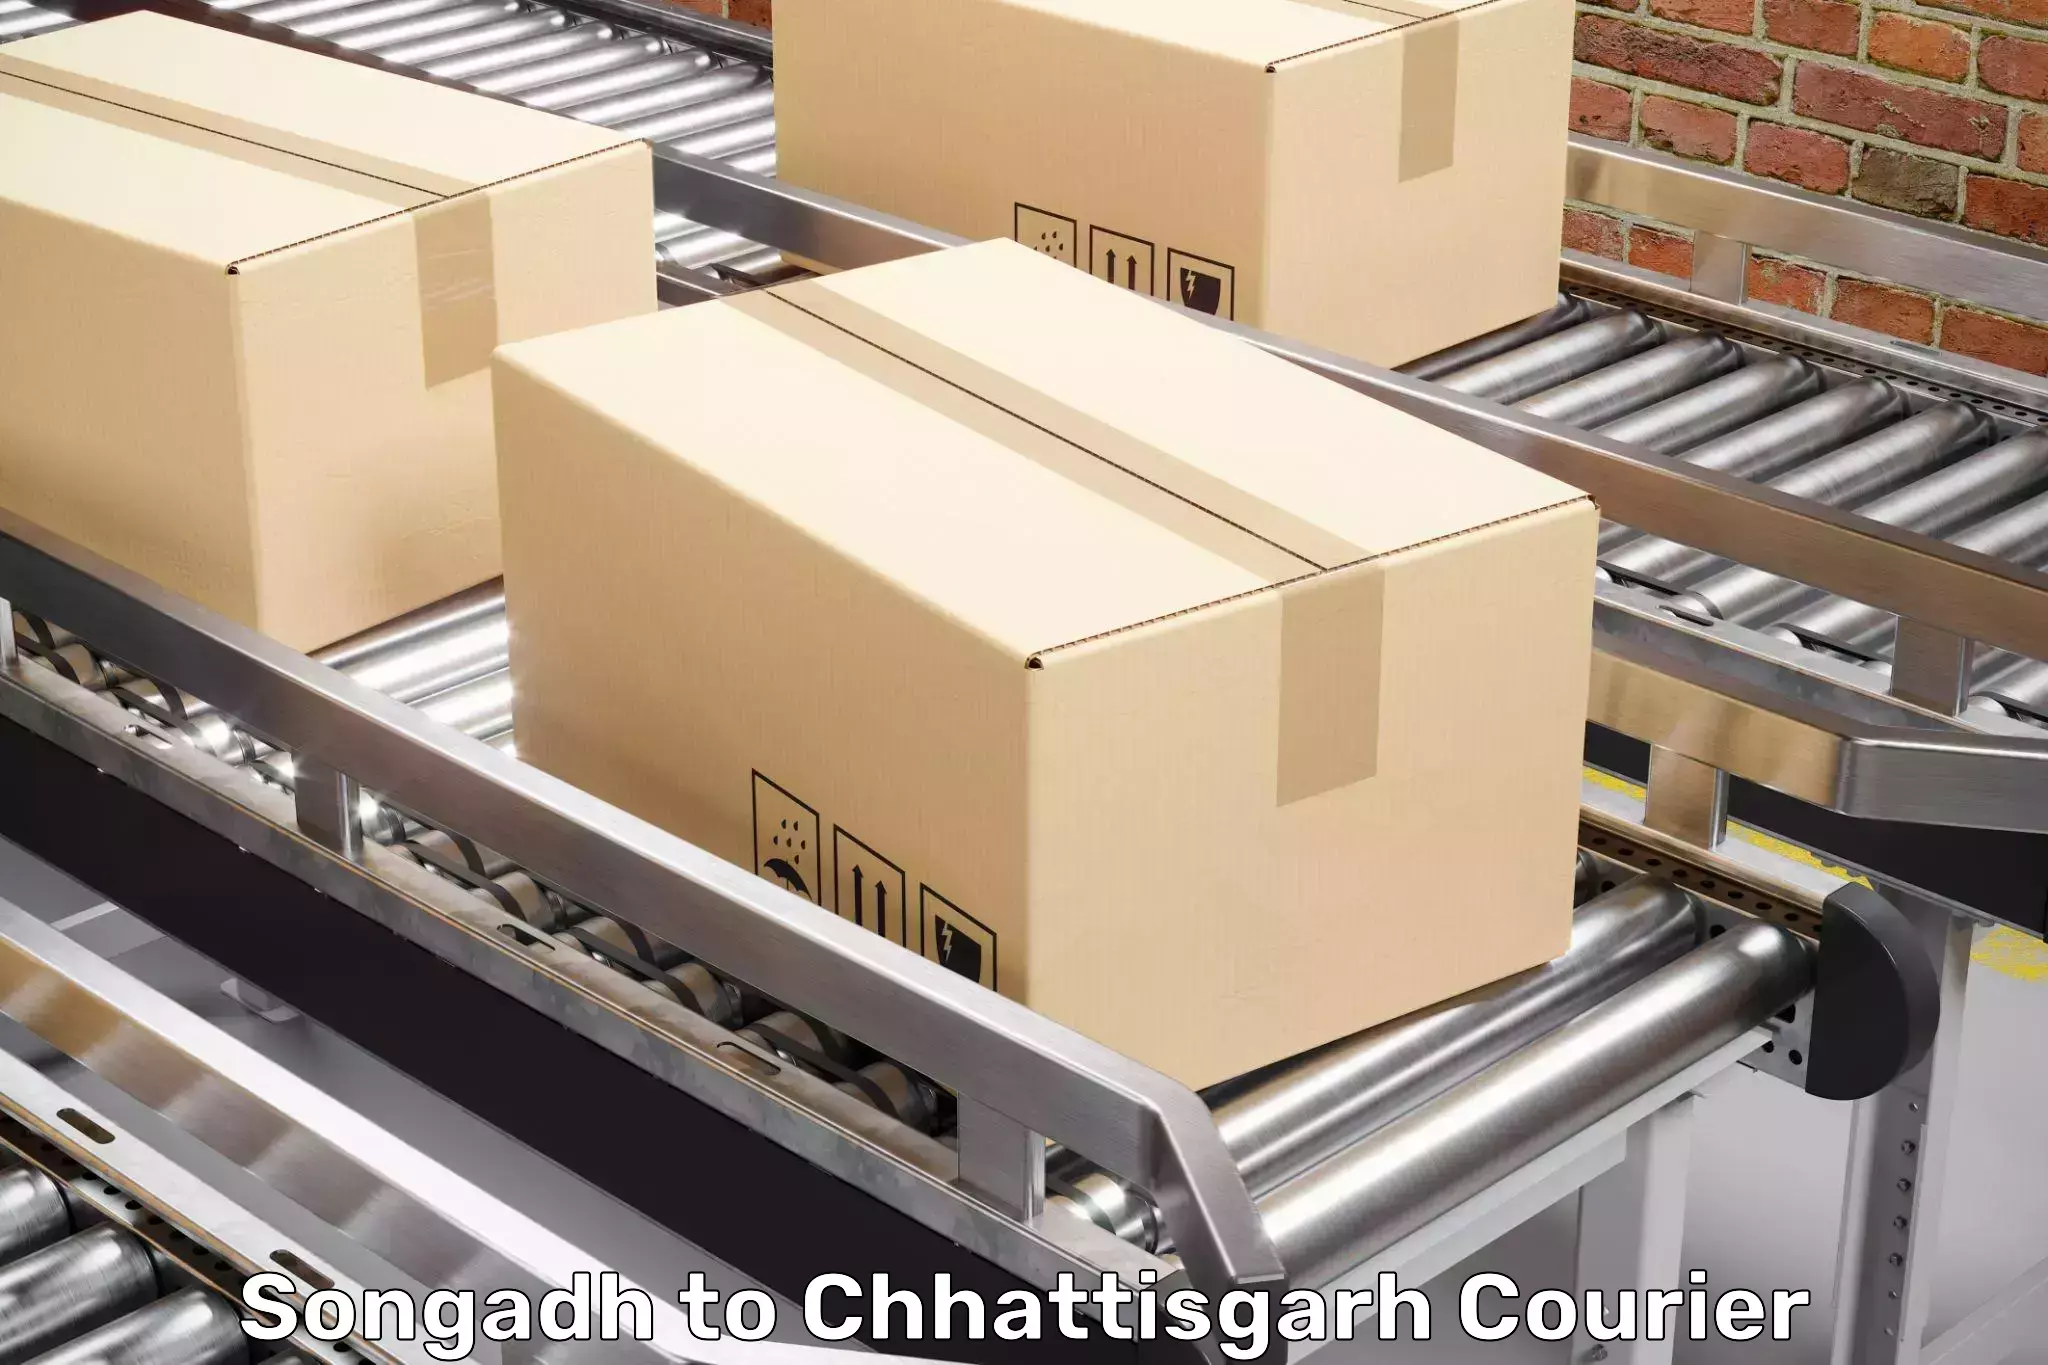 Professional moving company Songadh to Korea Chhattisgarh